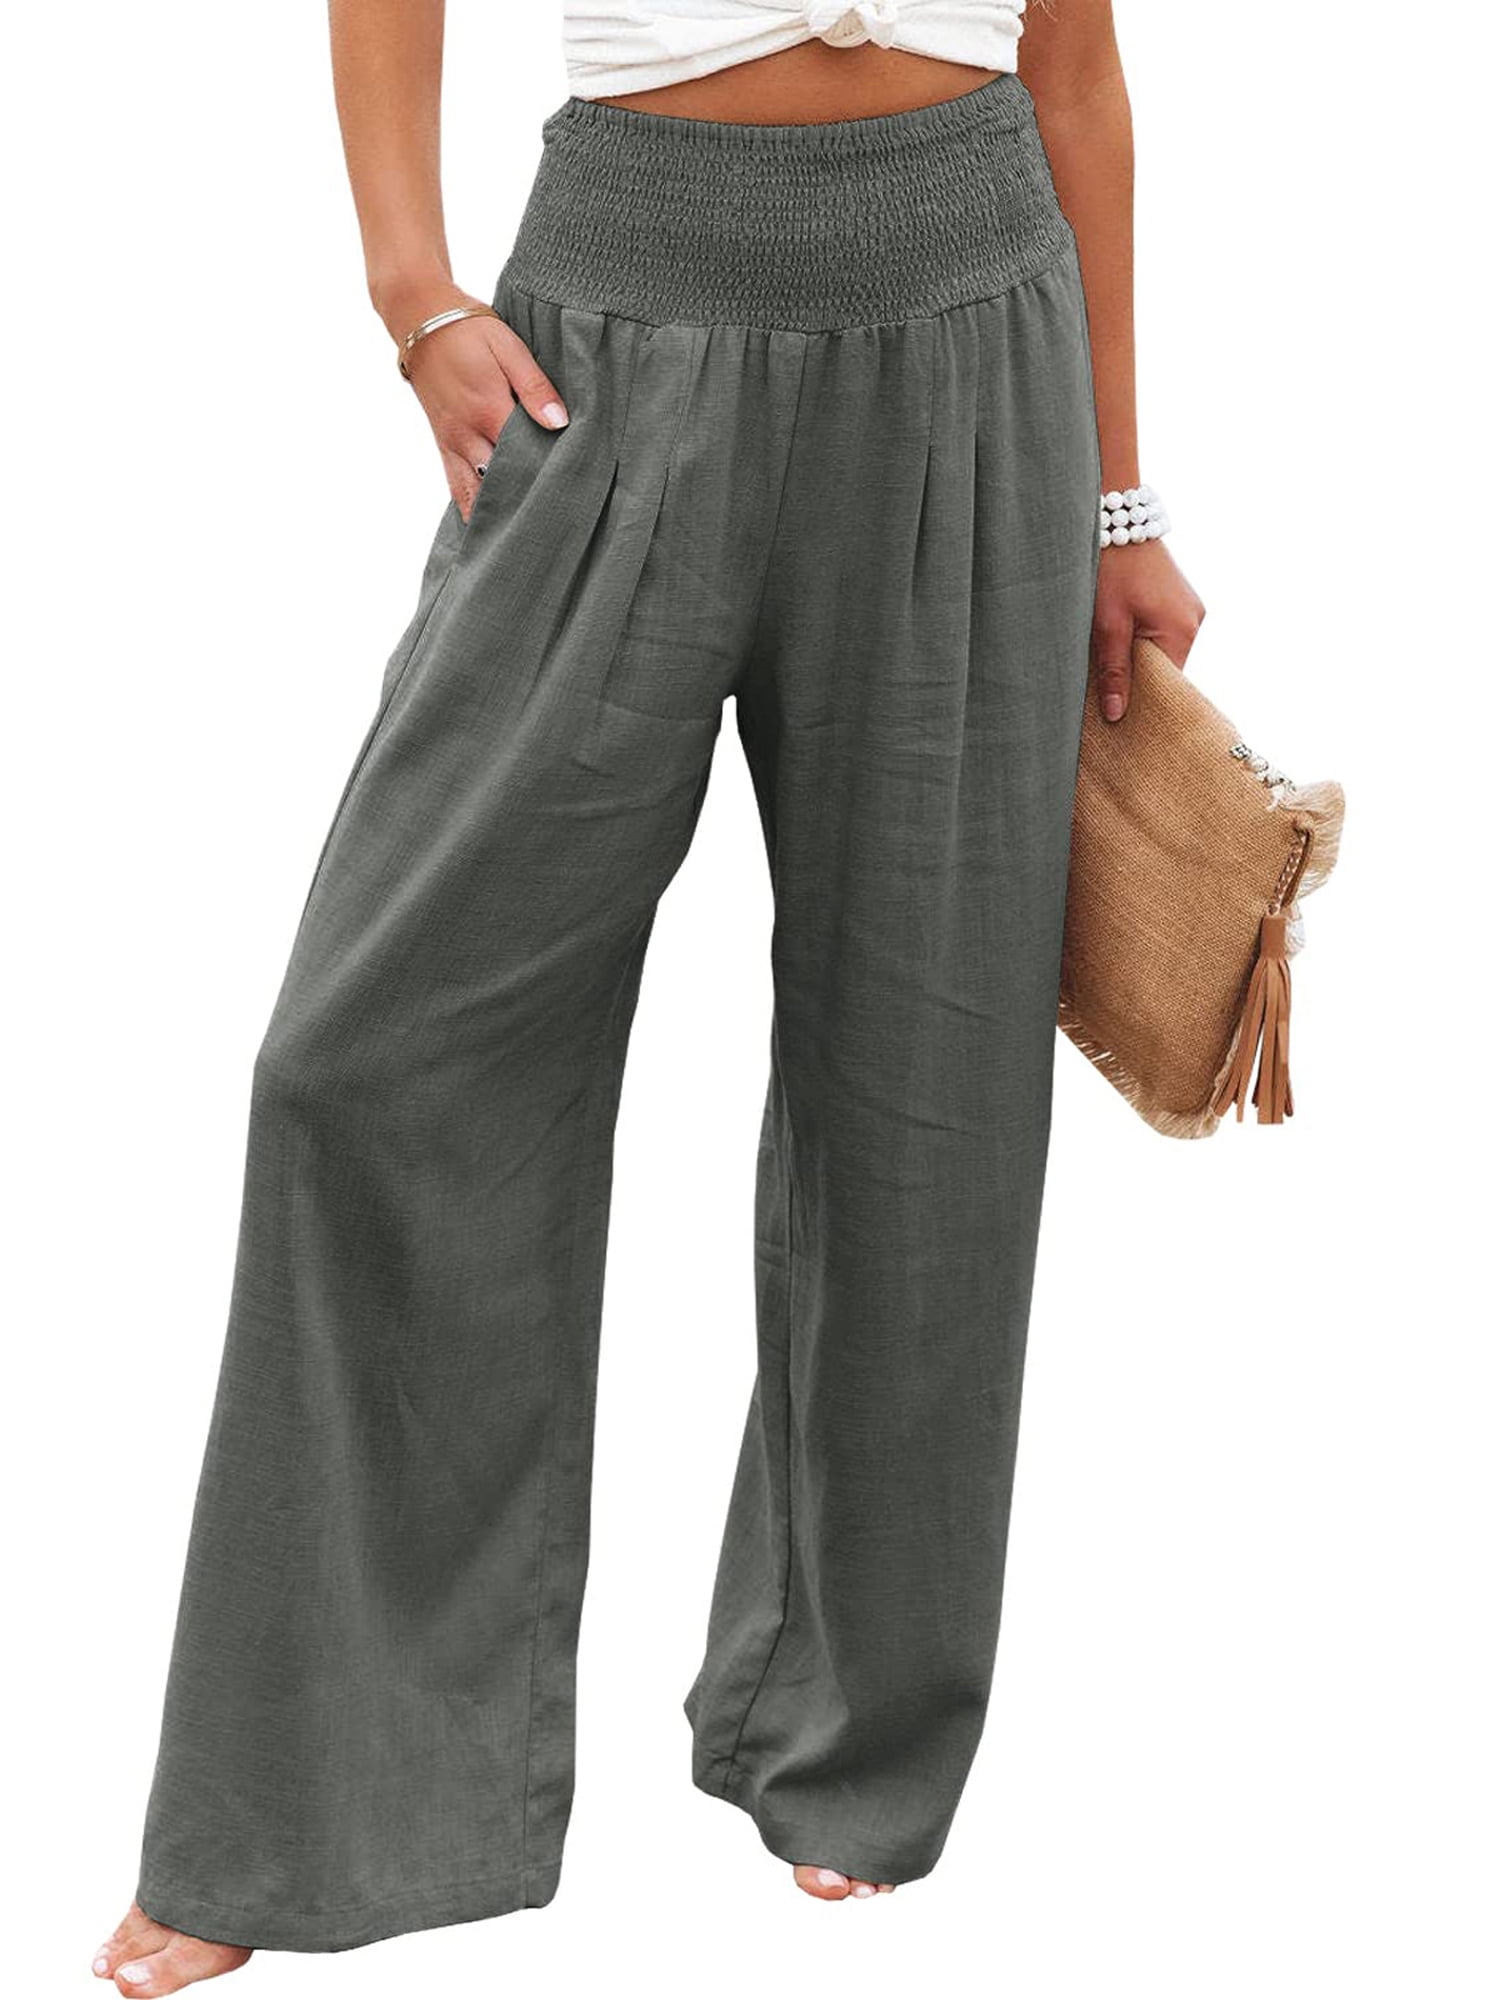 Women Cotton Linen Pants Elastic High Waist Wide Leg Palazzo Lounge Pants  Casual Loose Beach Pants with Pockets 